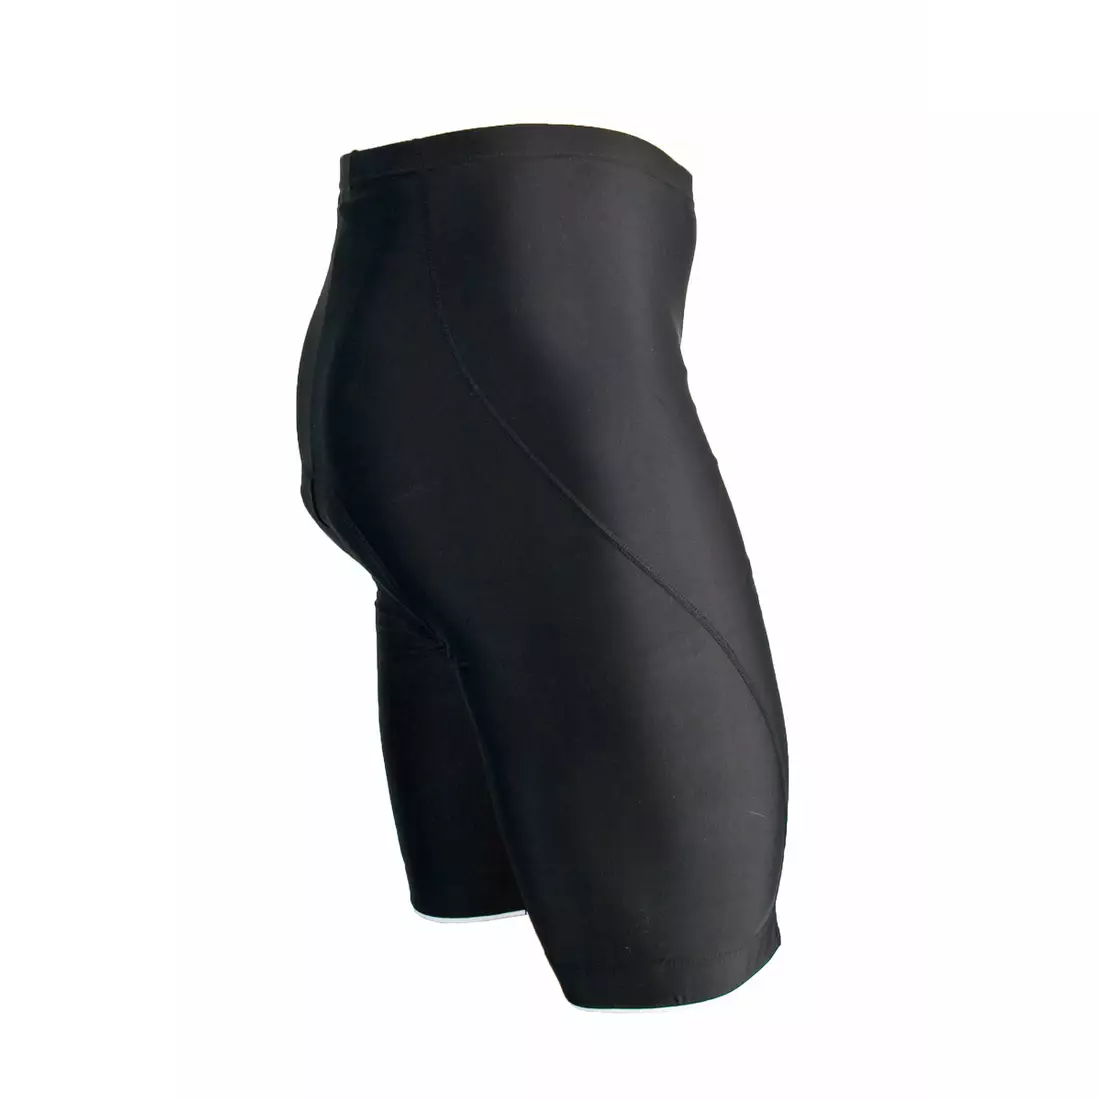 ROGELLI BIKE PATERNO cycling shorts 002.440, color: black